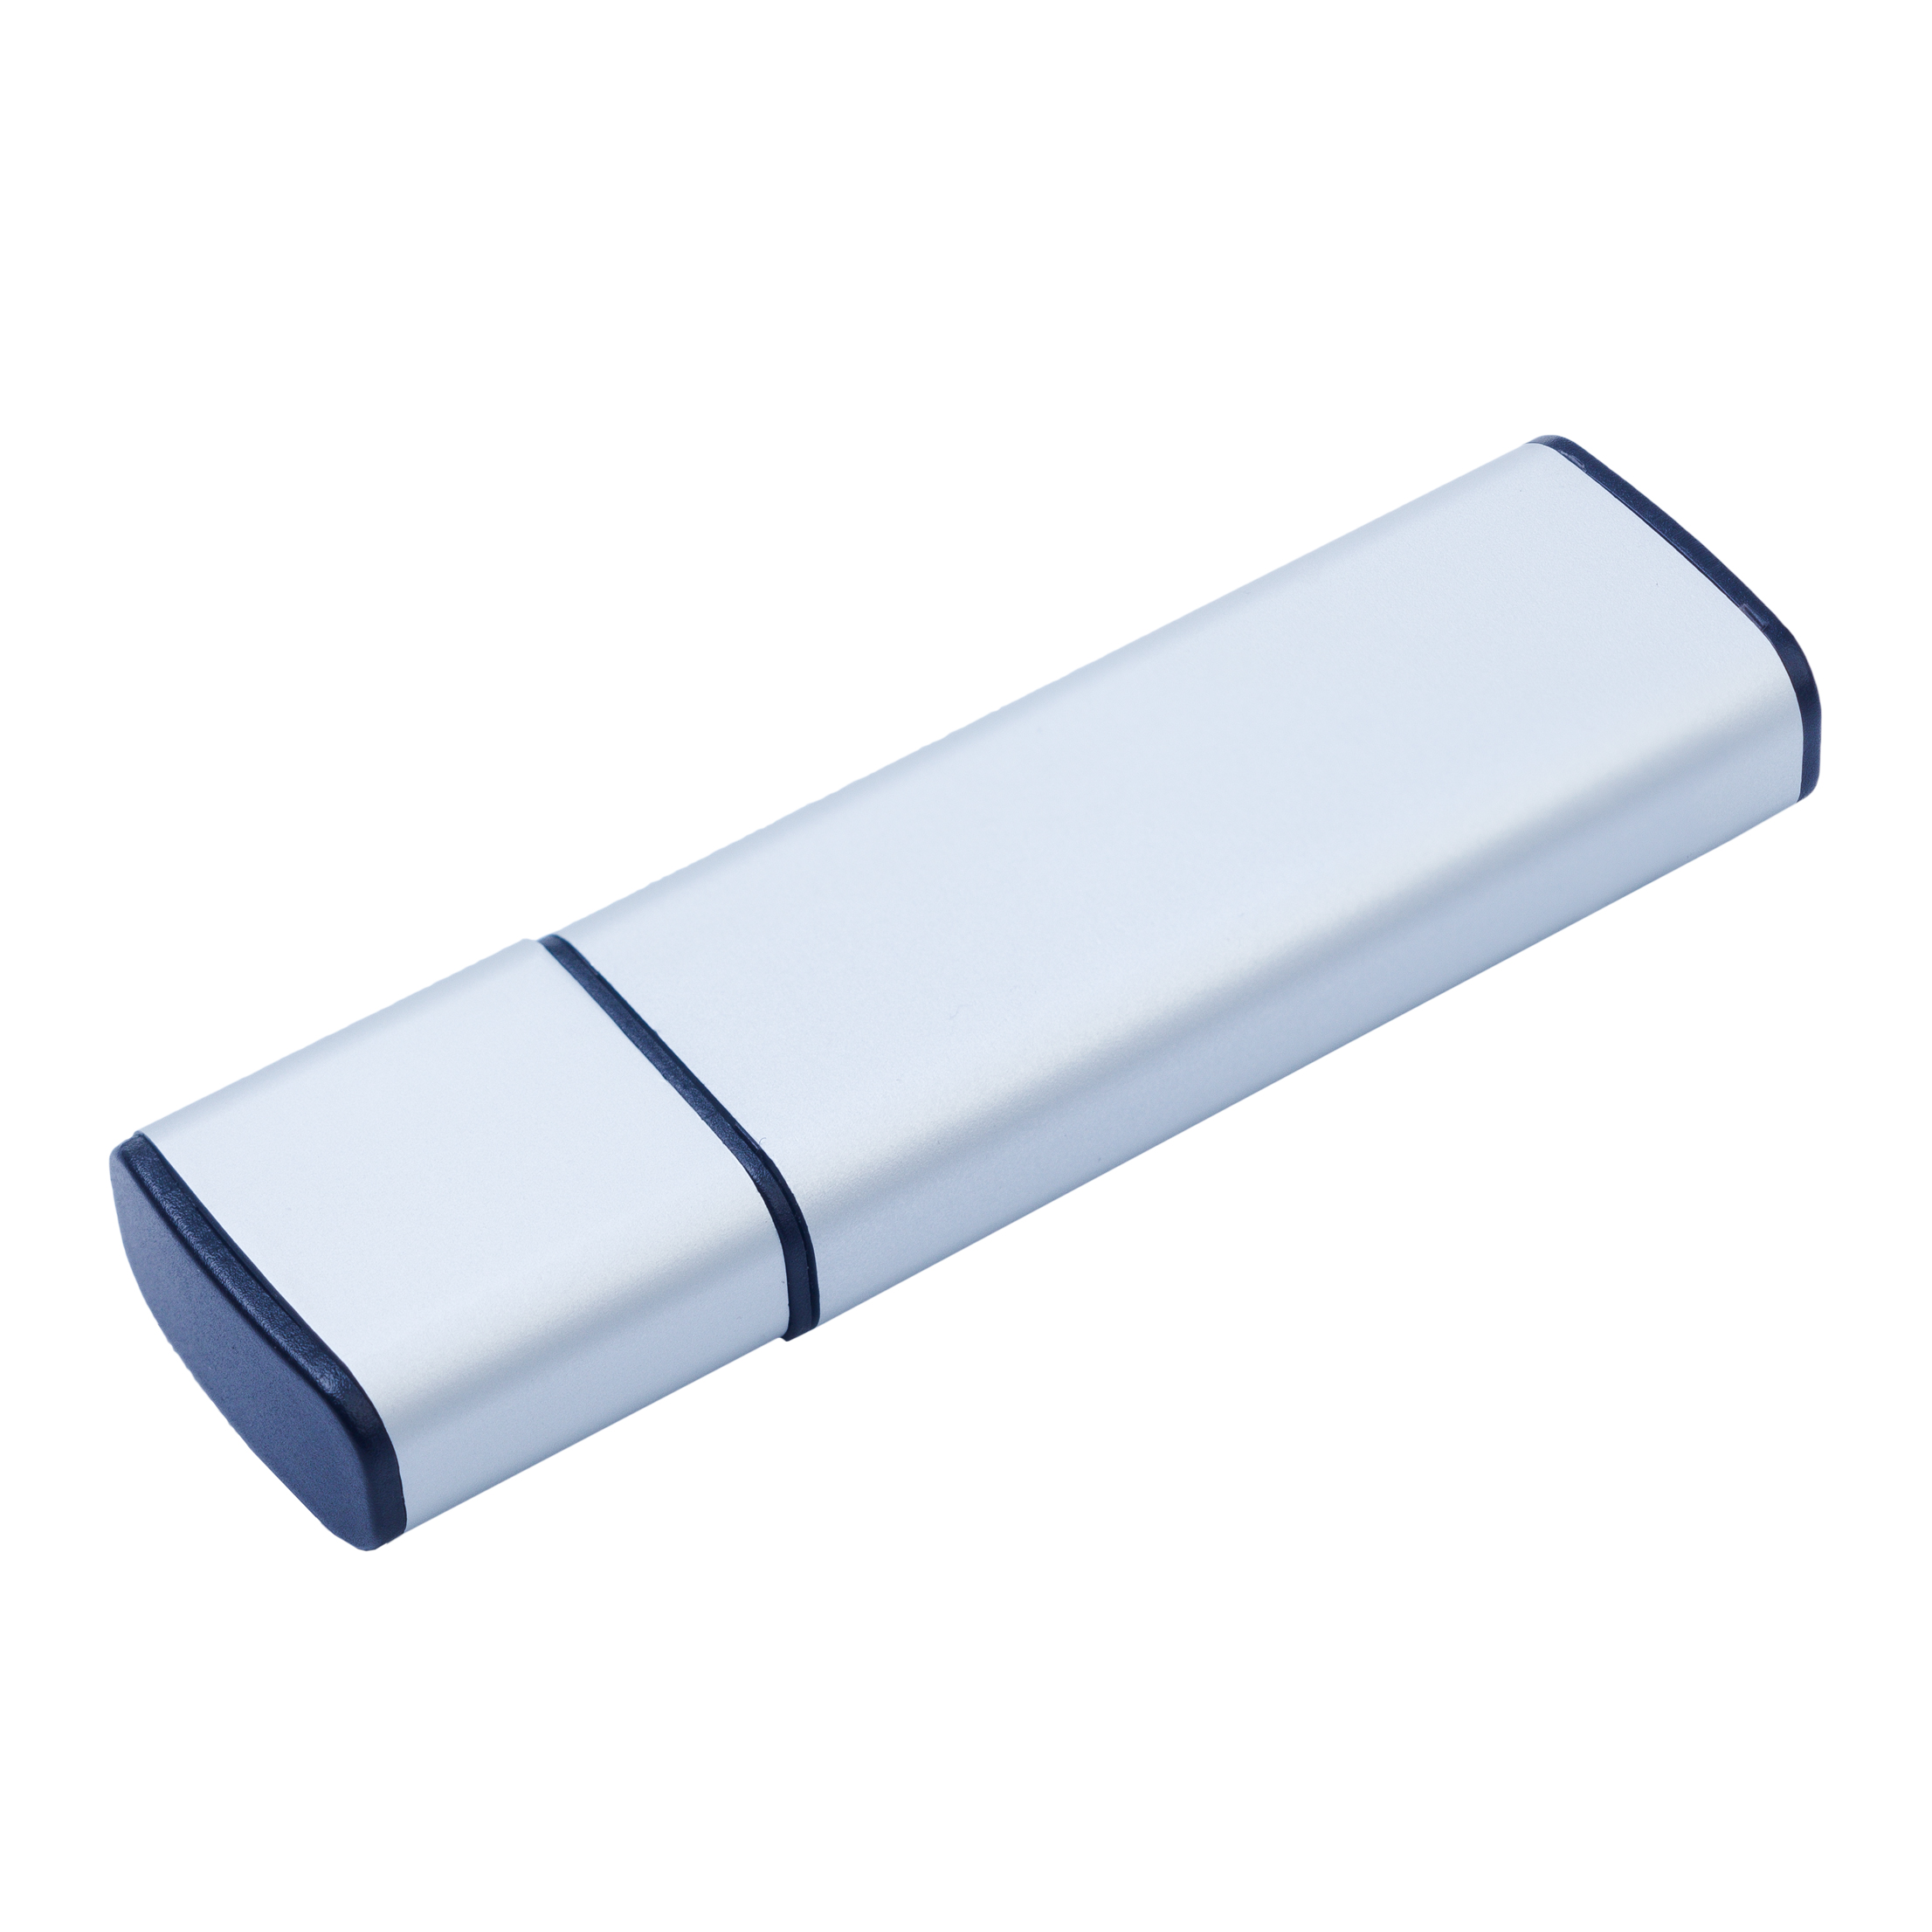 USB-флешка модель 122 USB 3.0, объем памяти 128 GB, цвет серебро